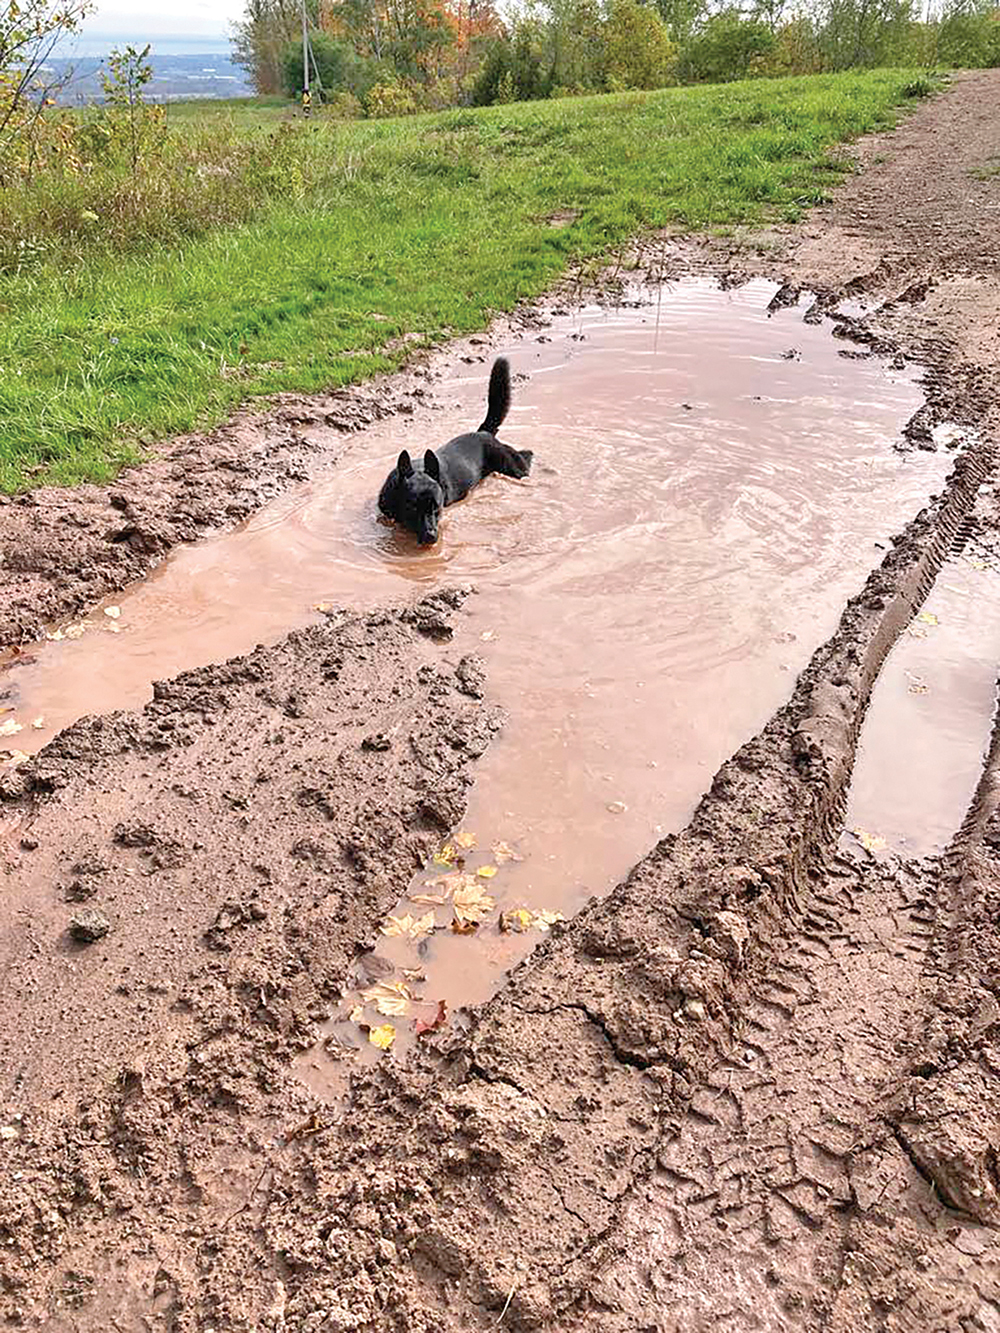 The old-fashioned kind of doggy mud bath.